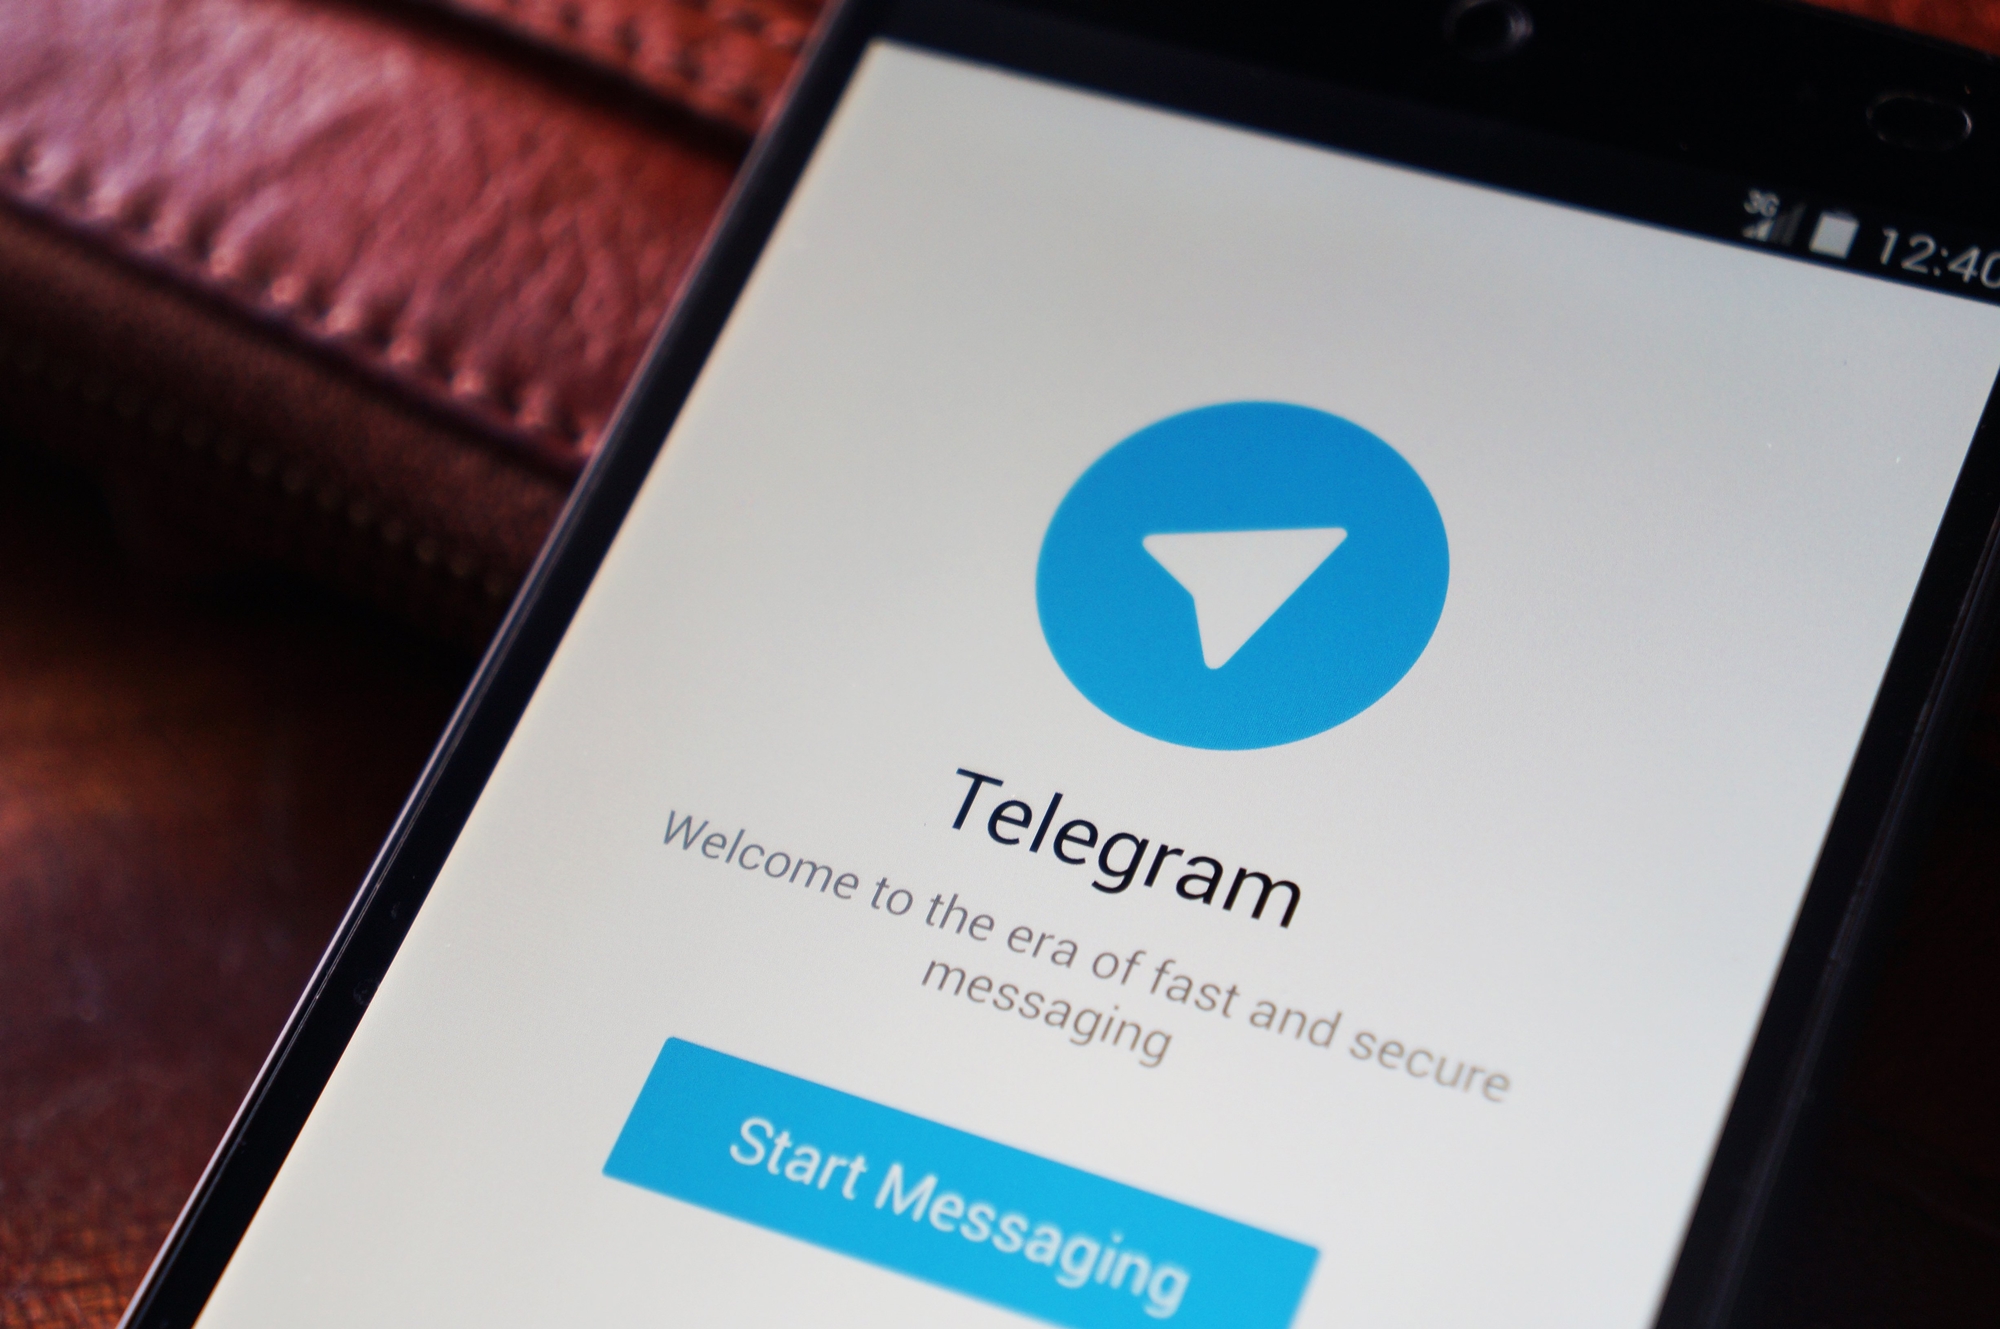 Advertising Comes to Telegram